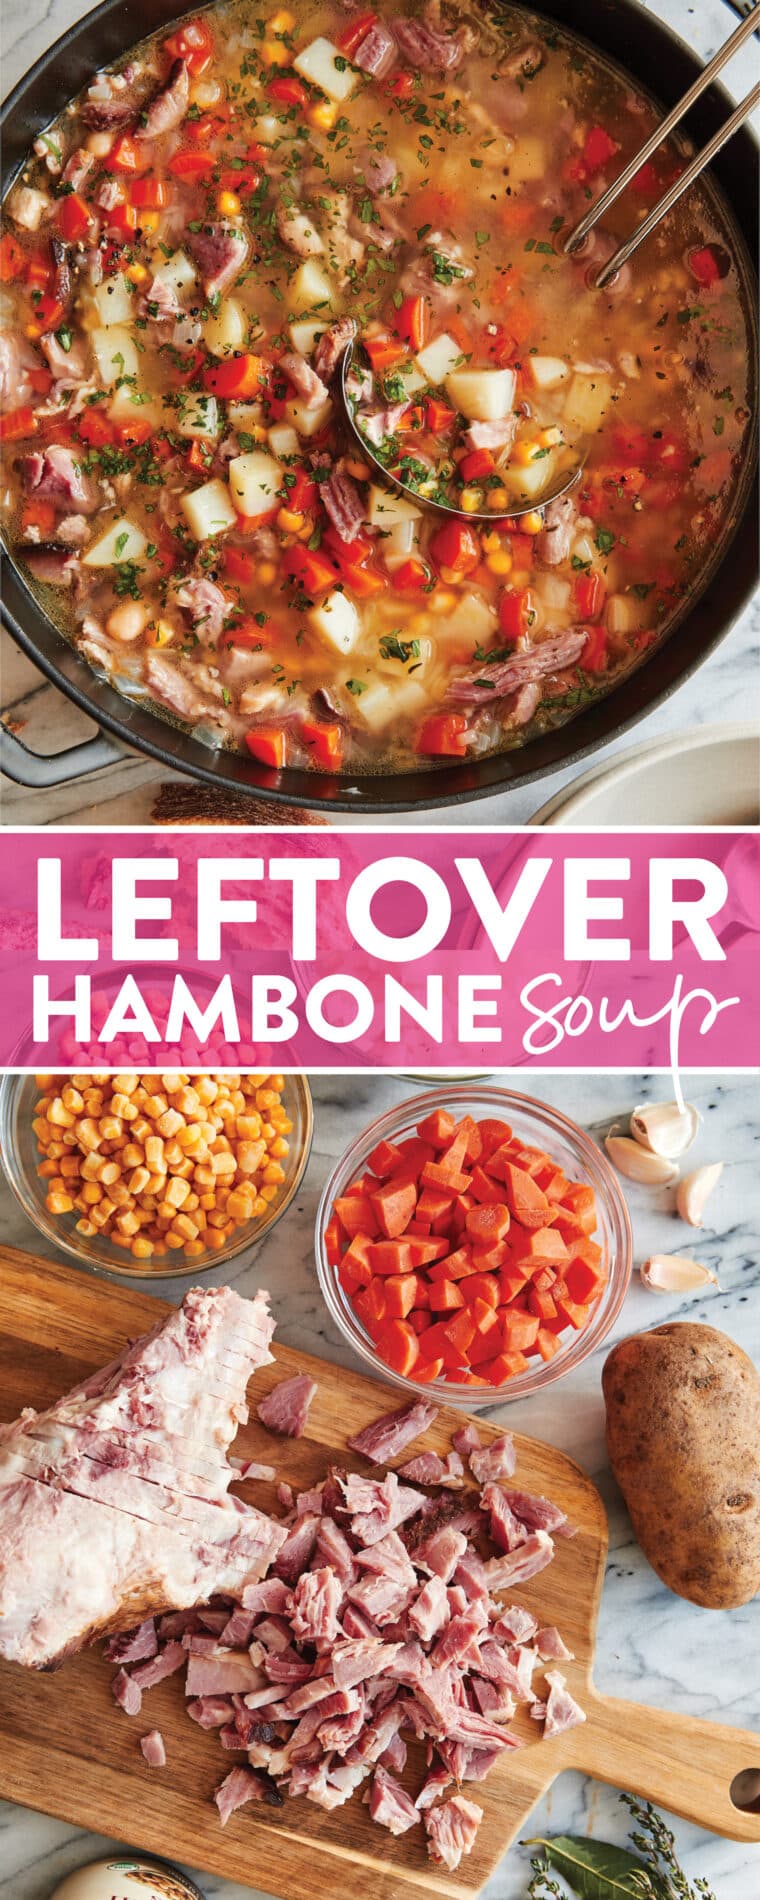 Leftover Hambone Soup Damn Delicious